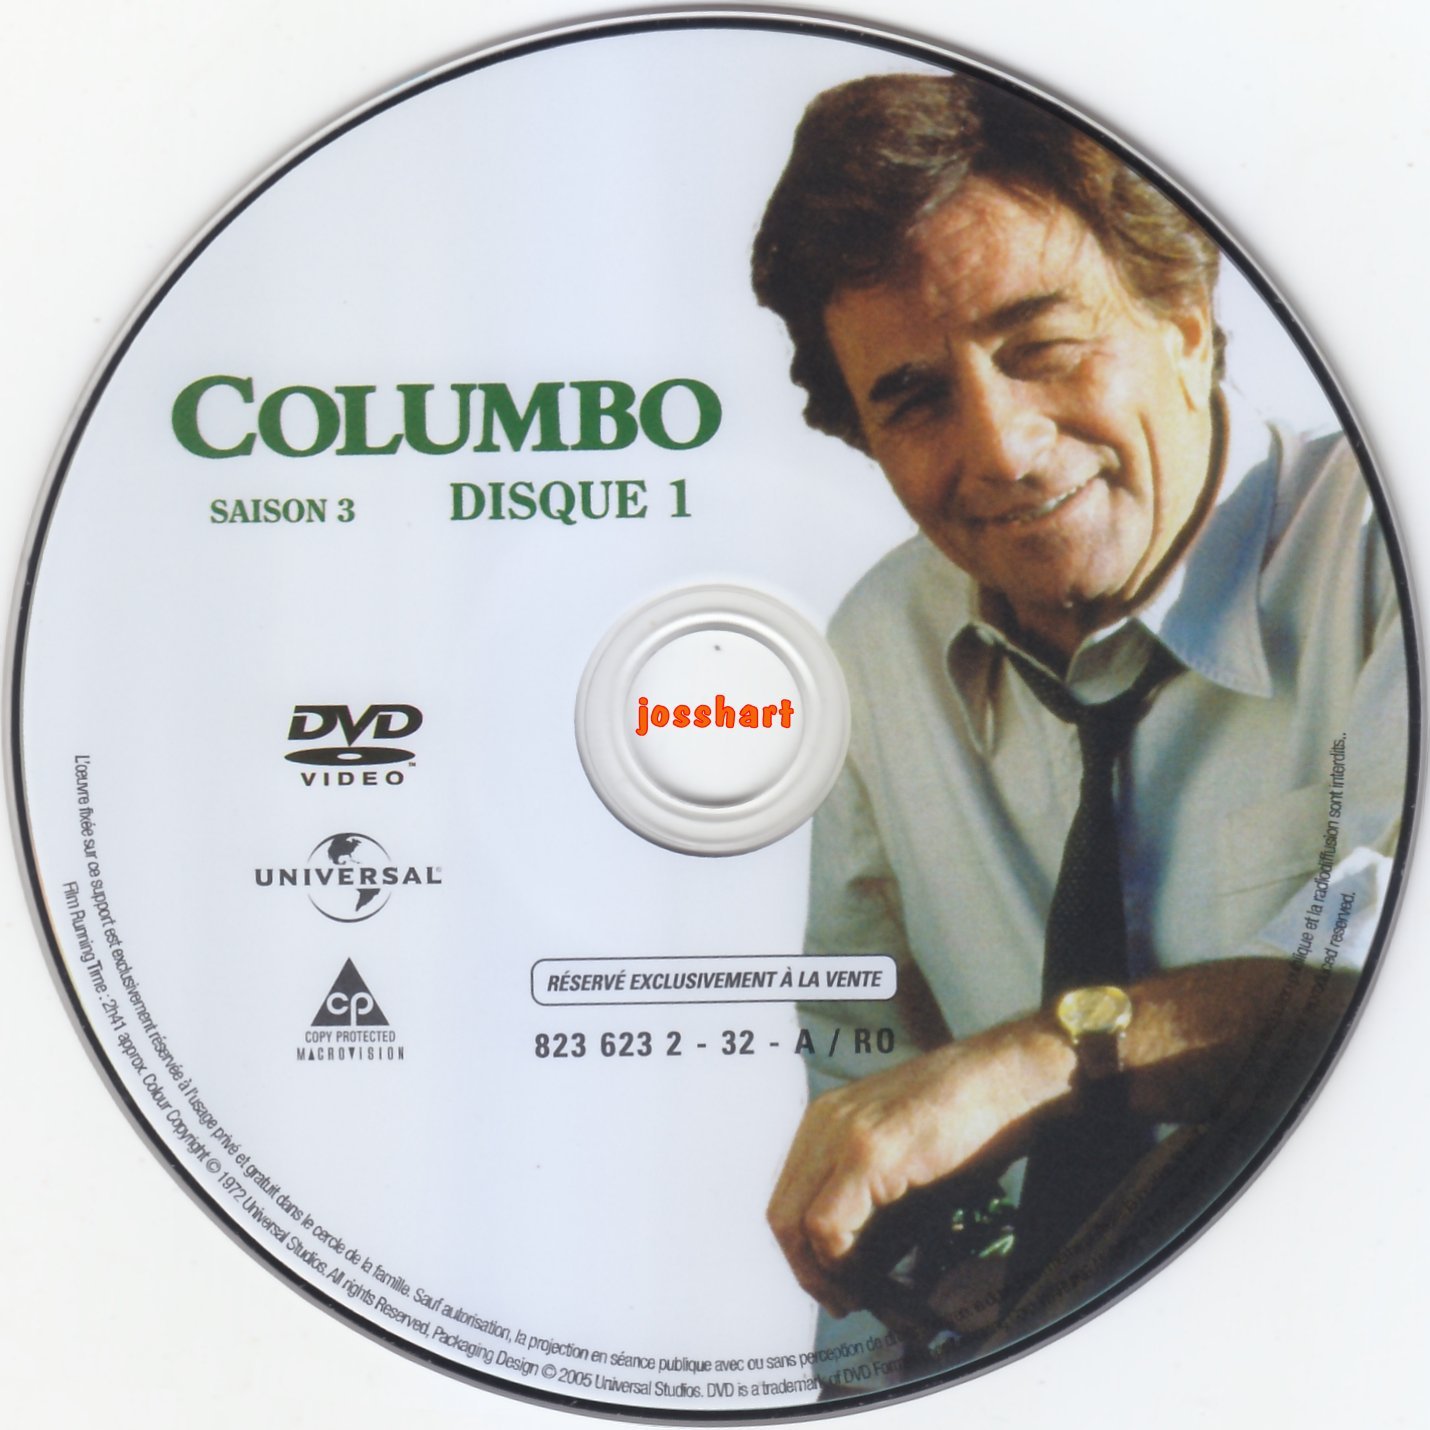 Columbo S3 DISC1